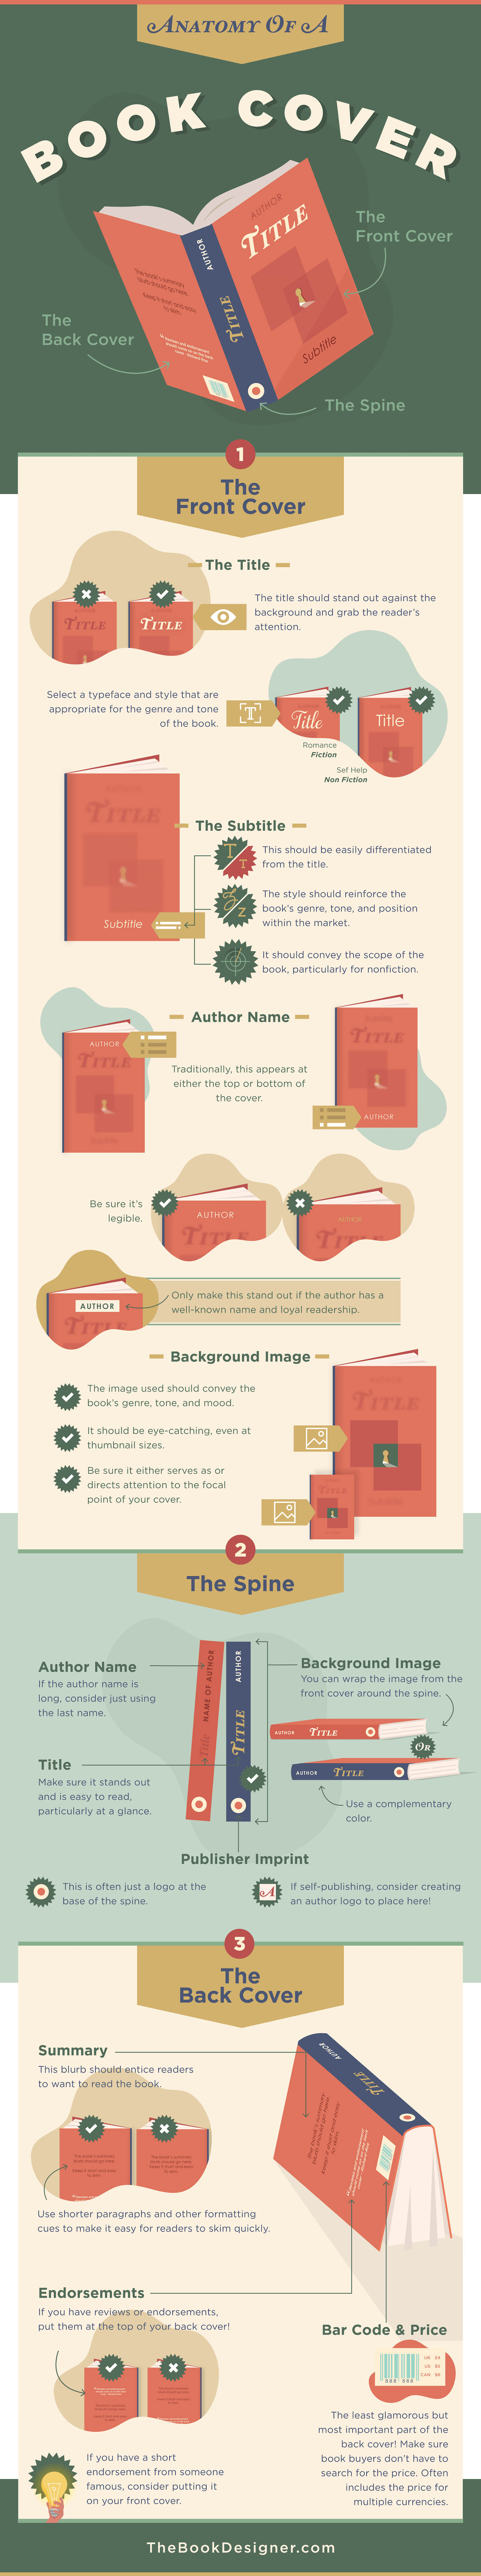 Anatomy of a Book Cover Design